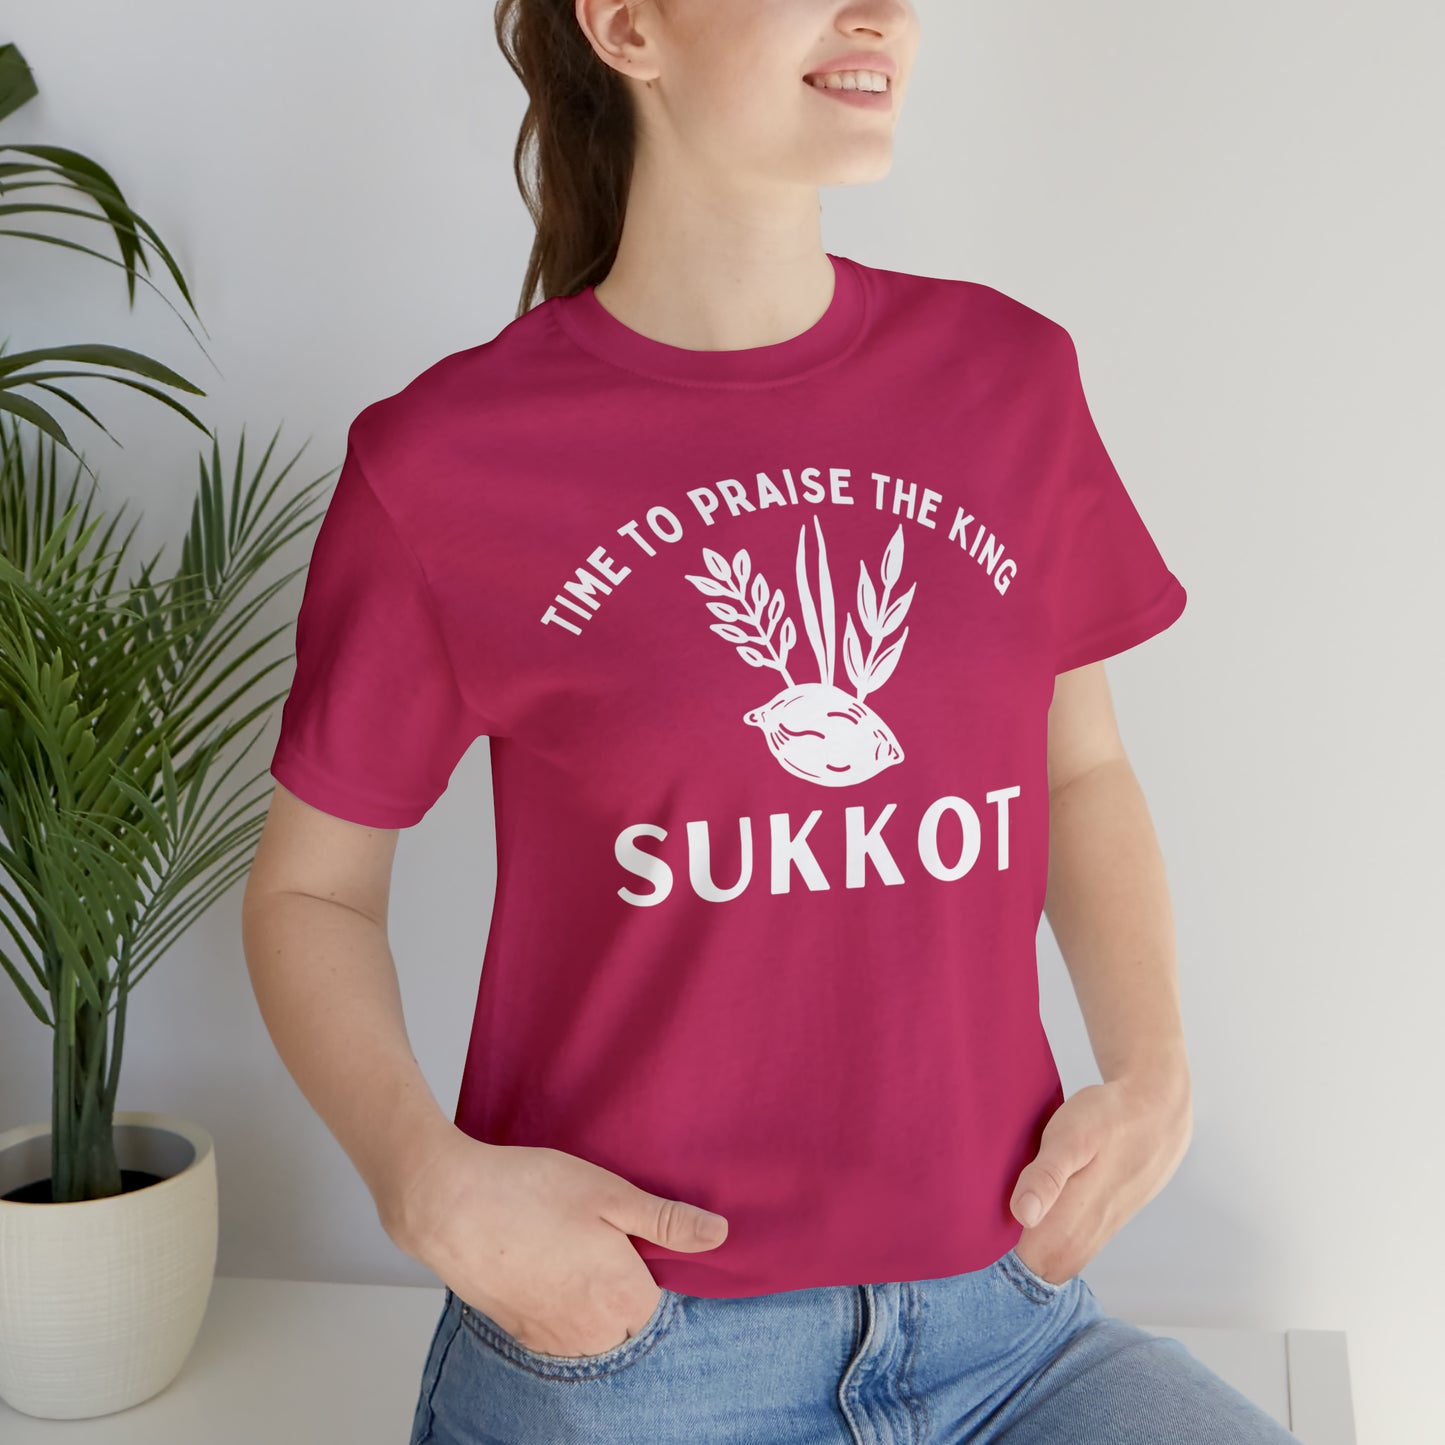 Lulav and Etrog Sukkot T-shirt (Green Pastures Apparel)